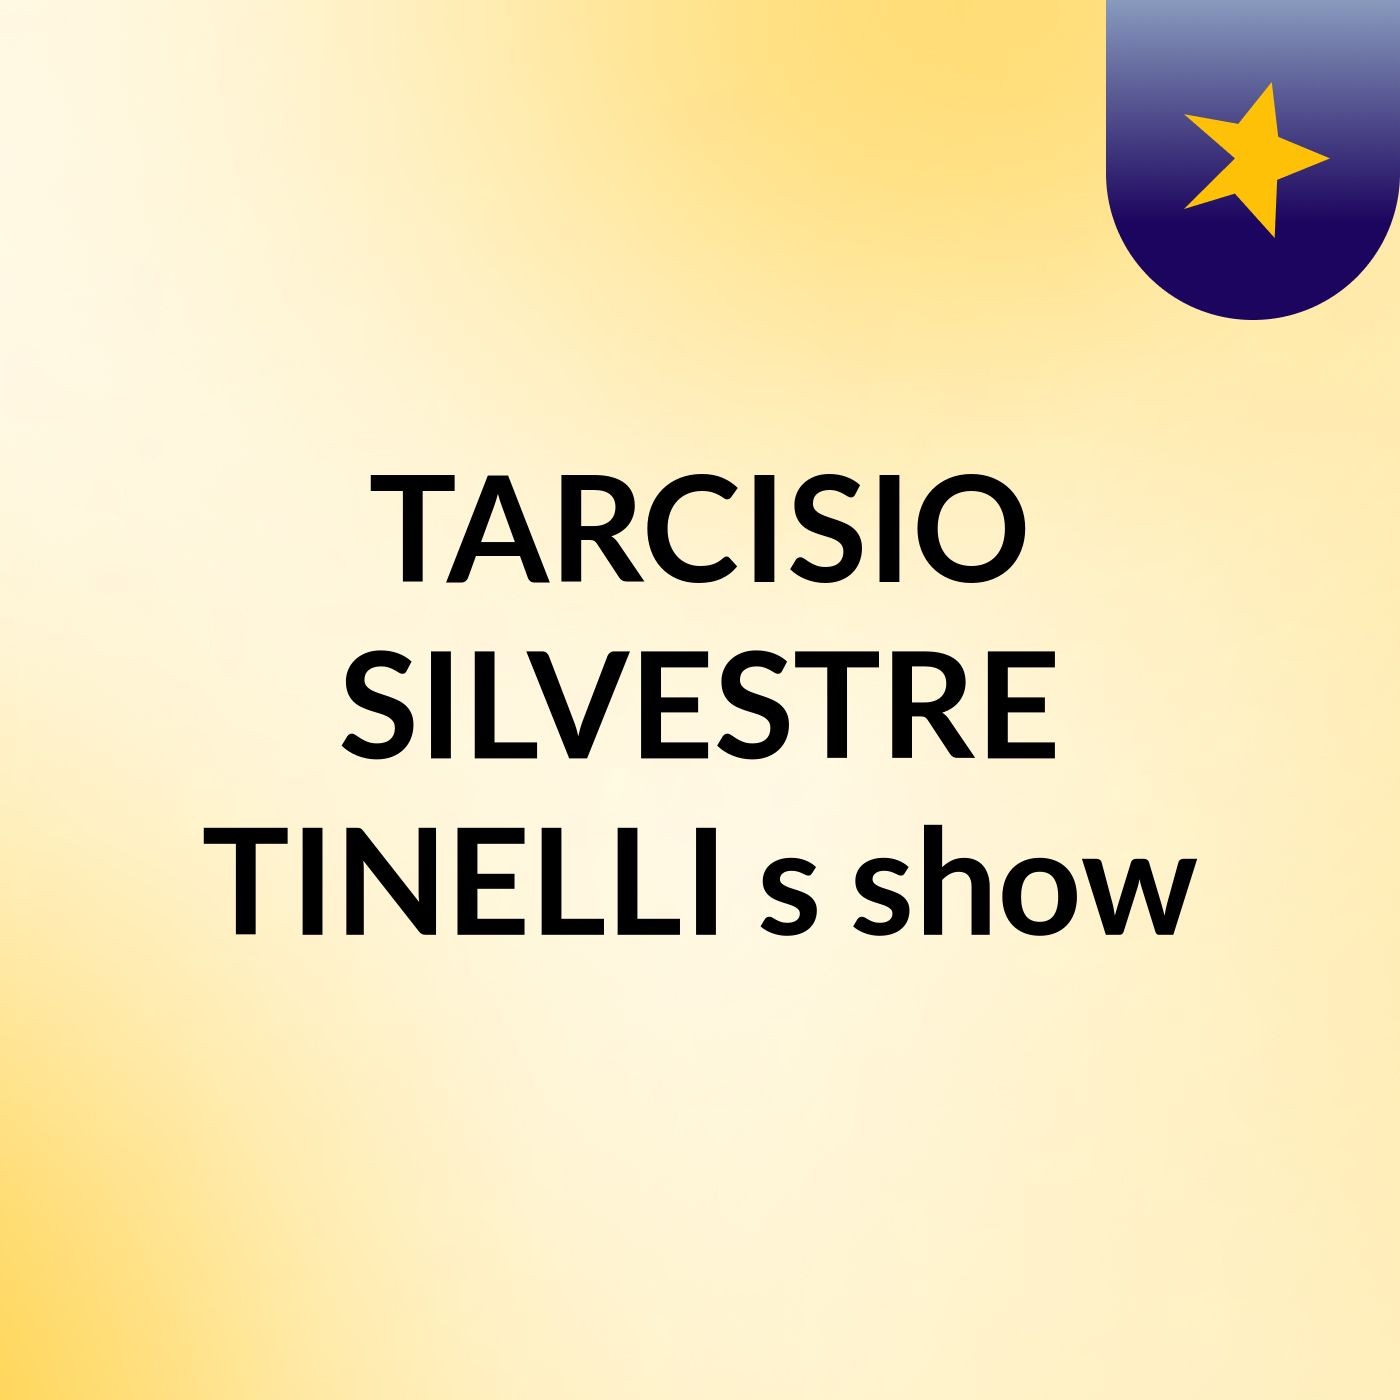 TARCISIO SILVESTRE TINELLI's show